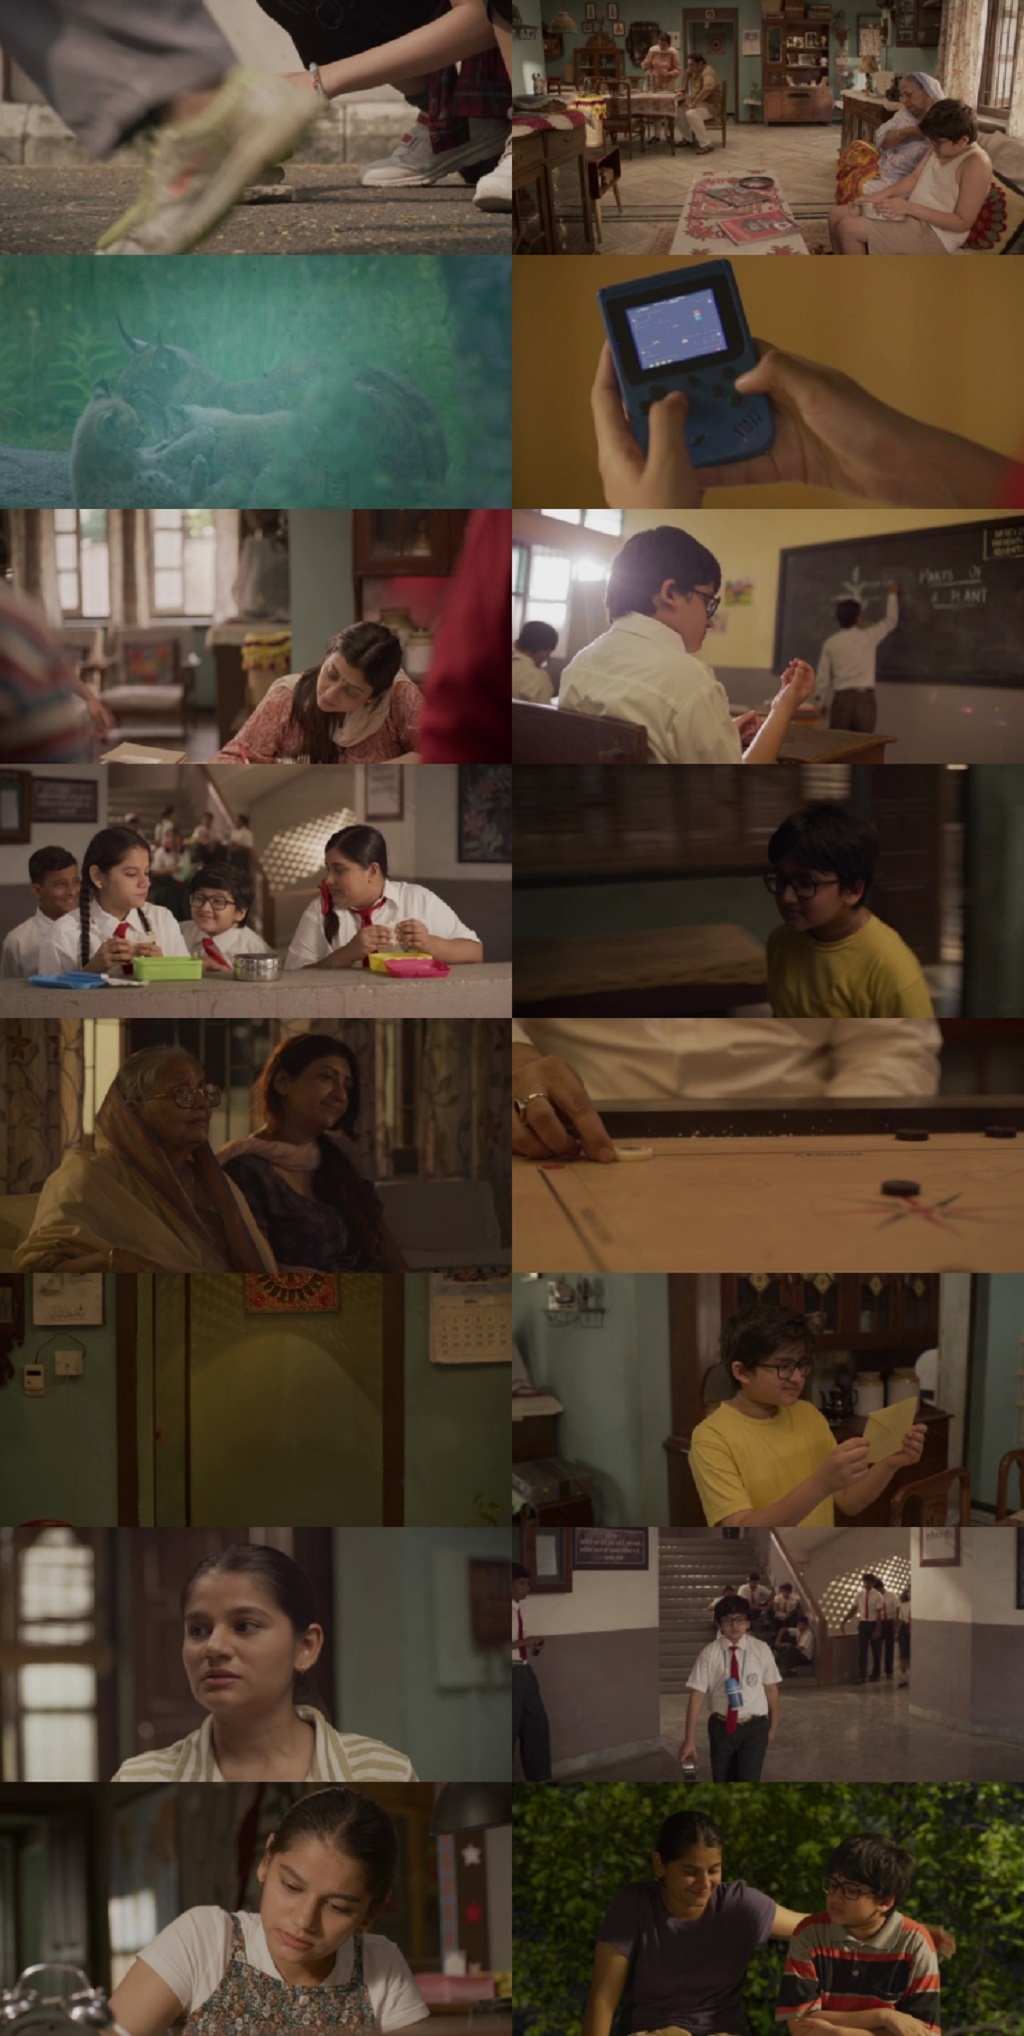 Yeh Meri Family 2024 Hindi Season 03 Complete 1080p 720p HDRip ESubs